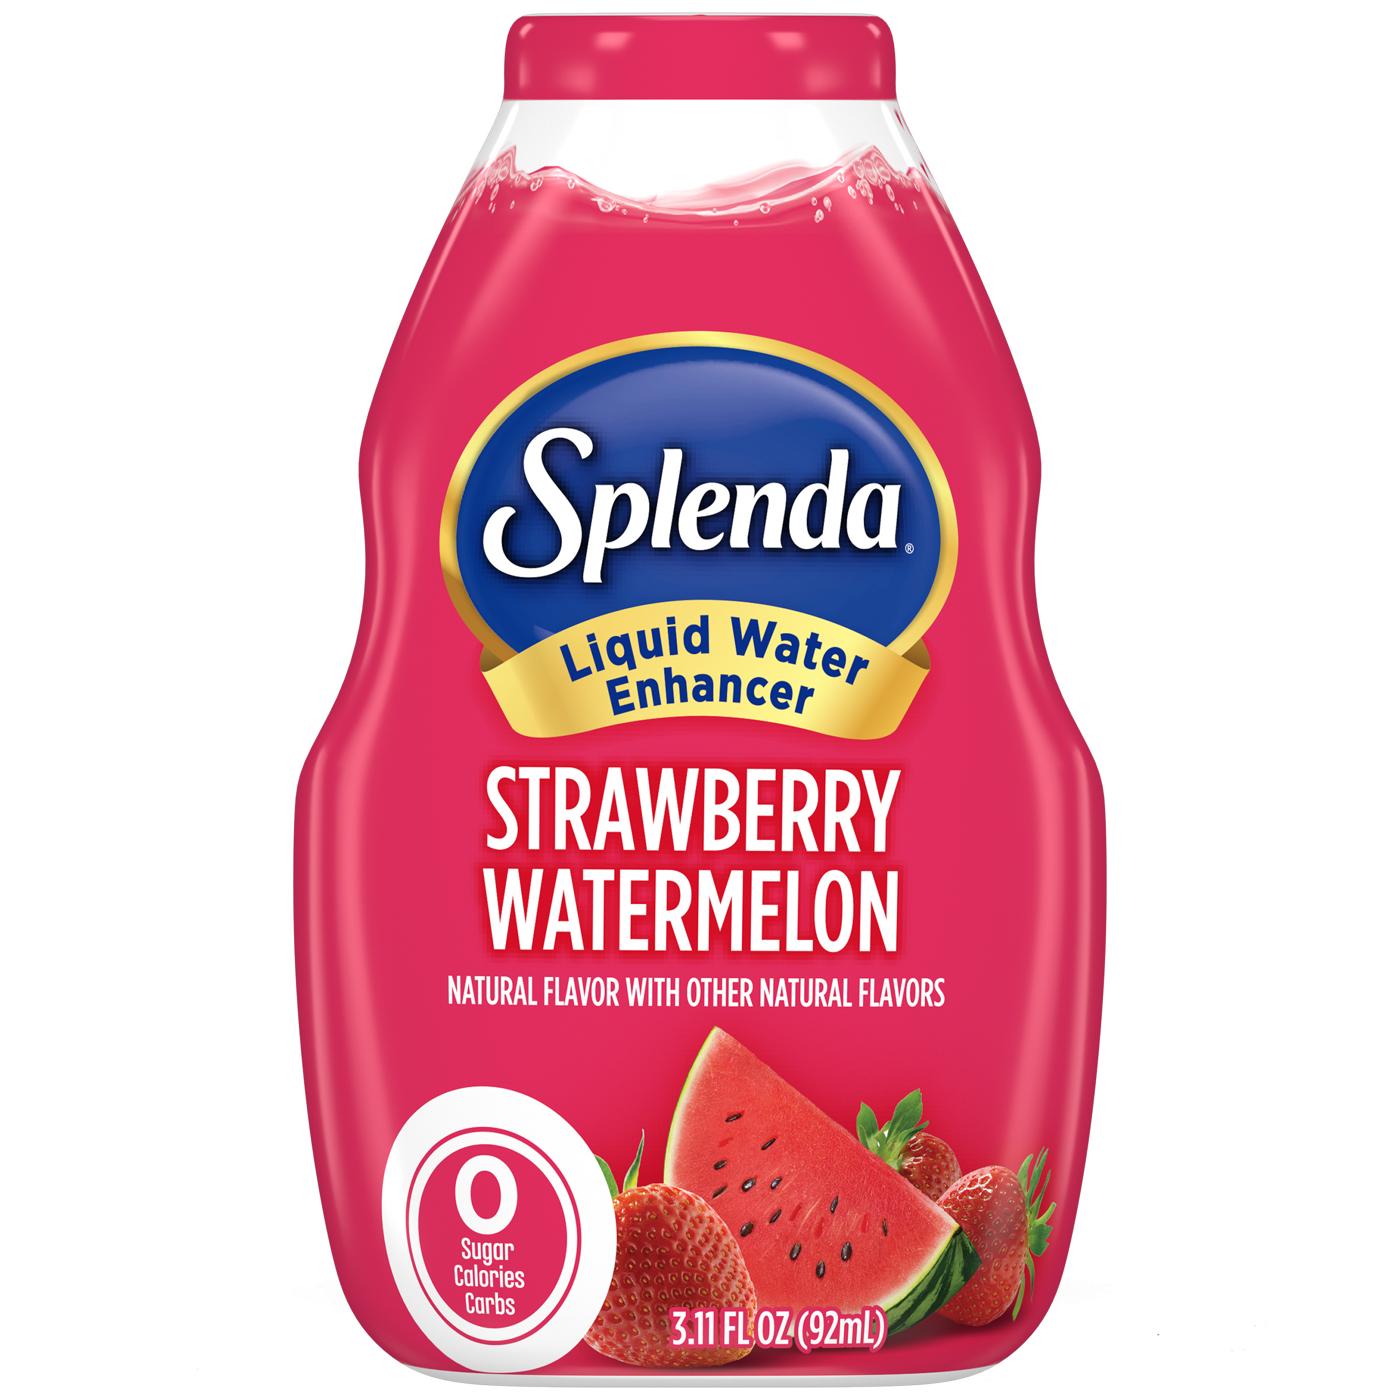 Splenda Liquid Water Enhancer - Strawberry Watermelon; image 1 of 2